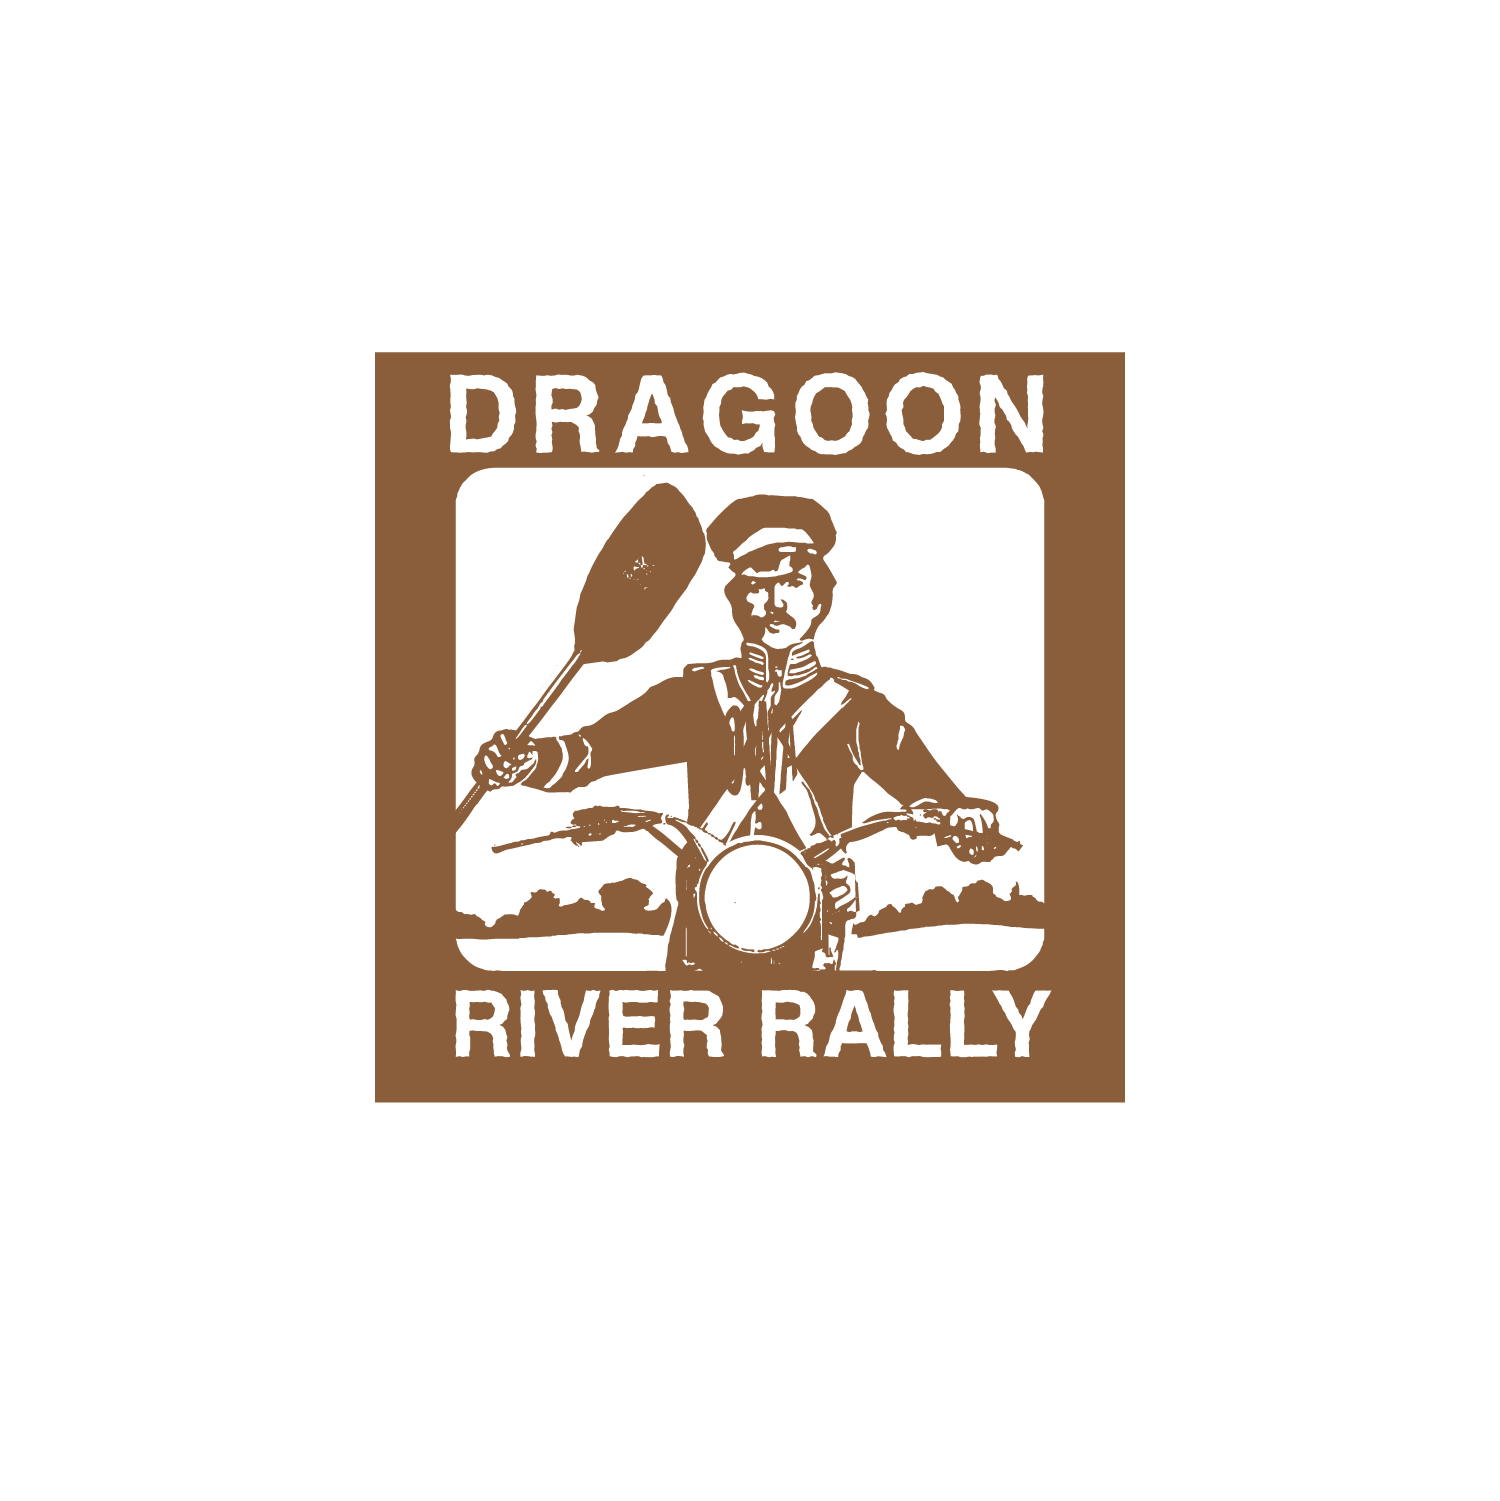 Dragoon River Rally logo by OLSON MCINTYRE